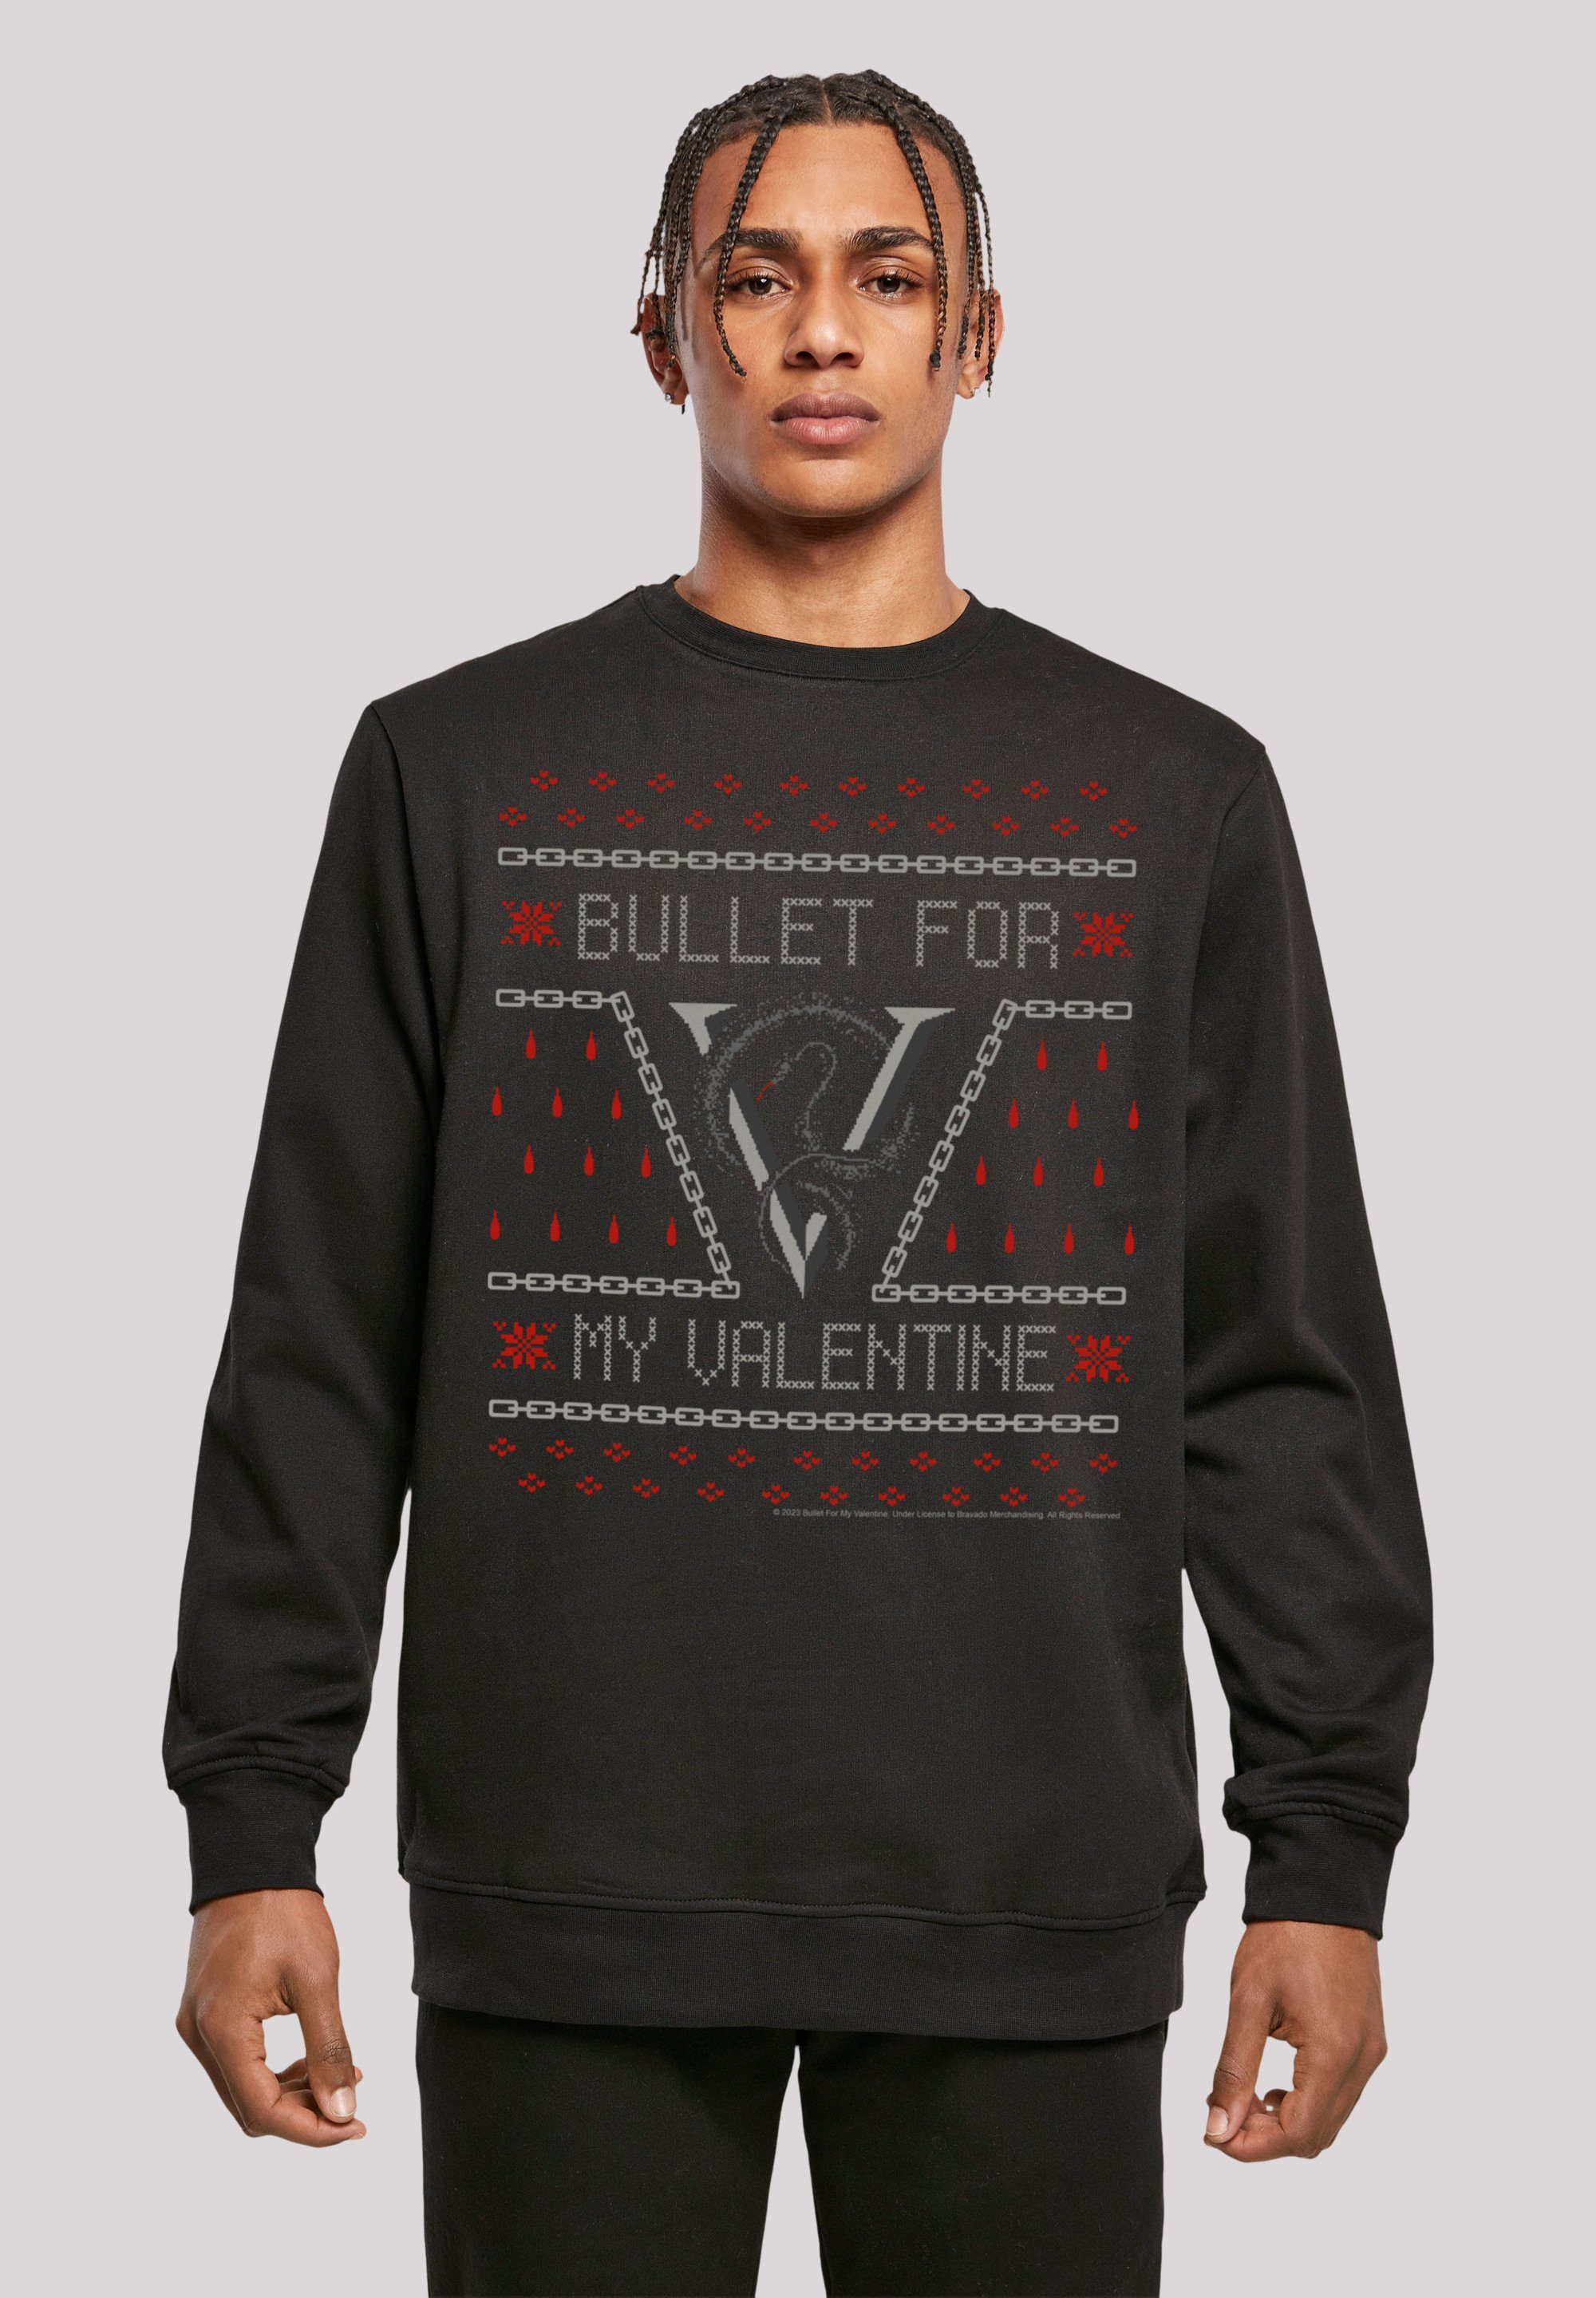 Sweatshirt Rock-Musik, Christmas for Premium Bullet Qualität, F4NT4STIC Band Band Valentine my Metal